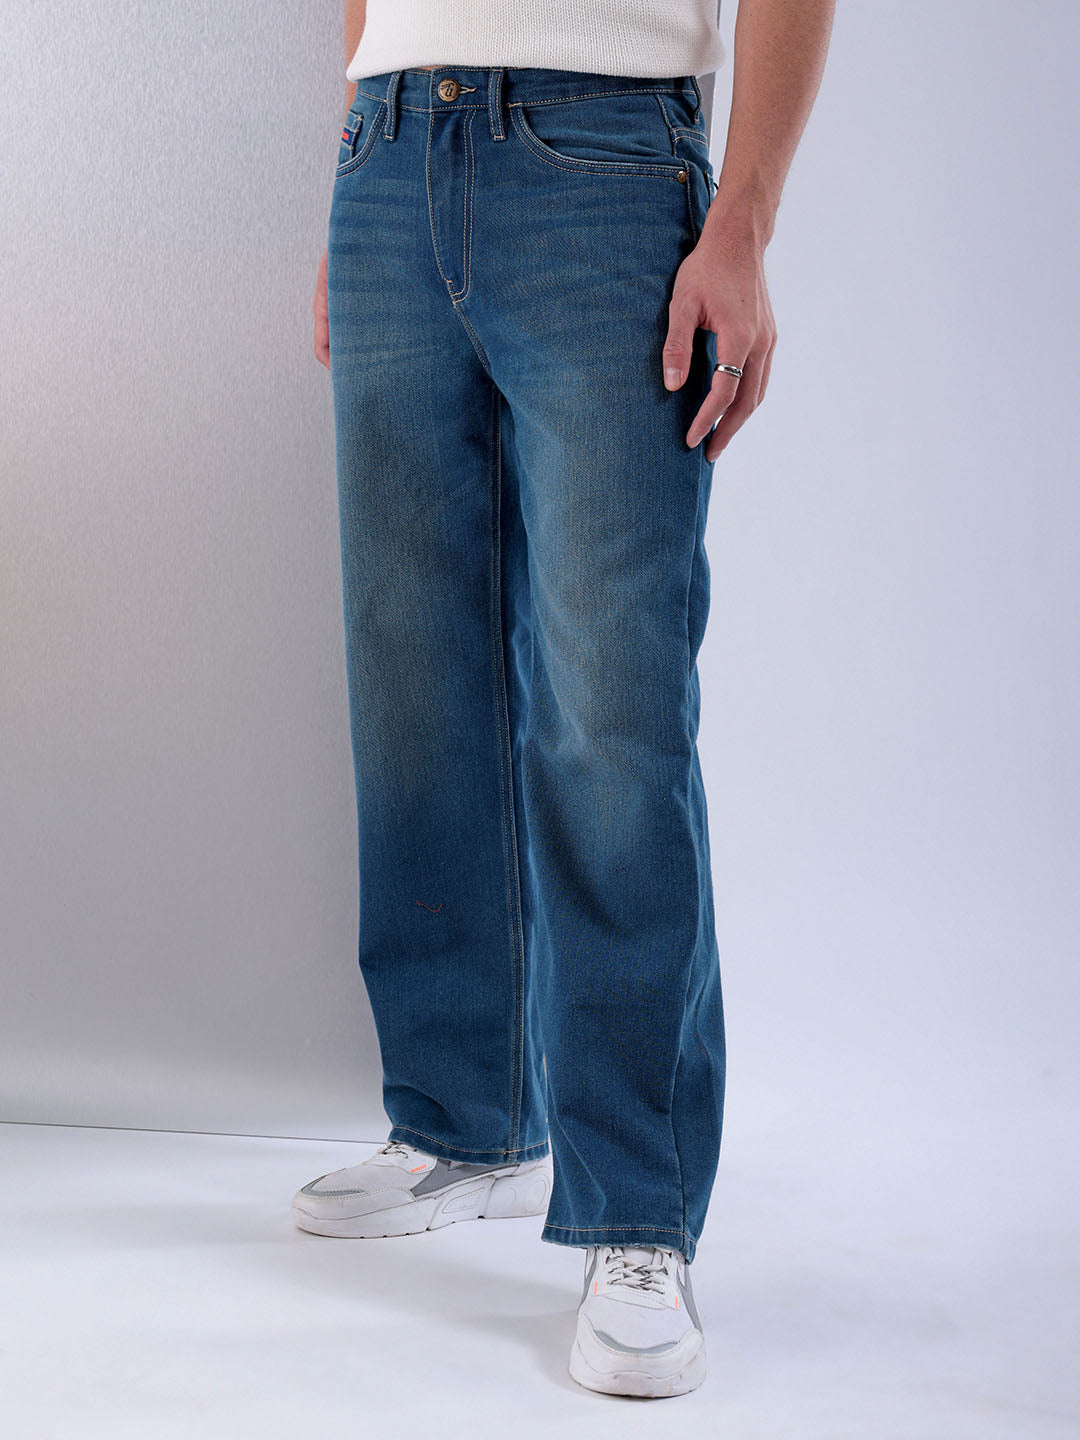 Shop Men Relaxed Fit Jeans Online.